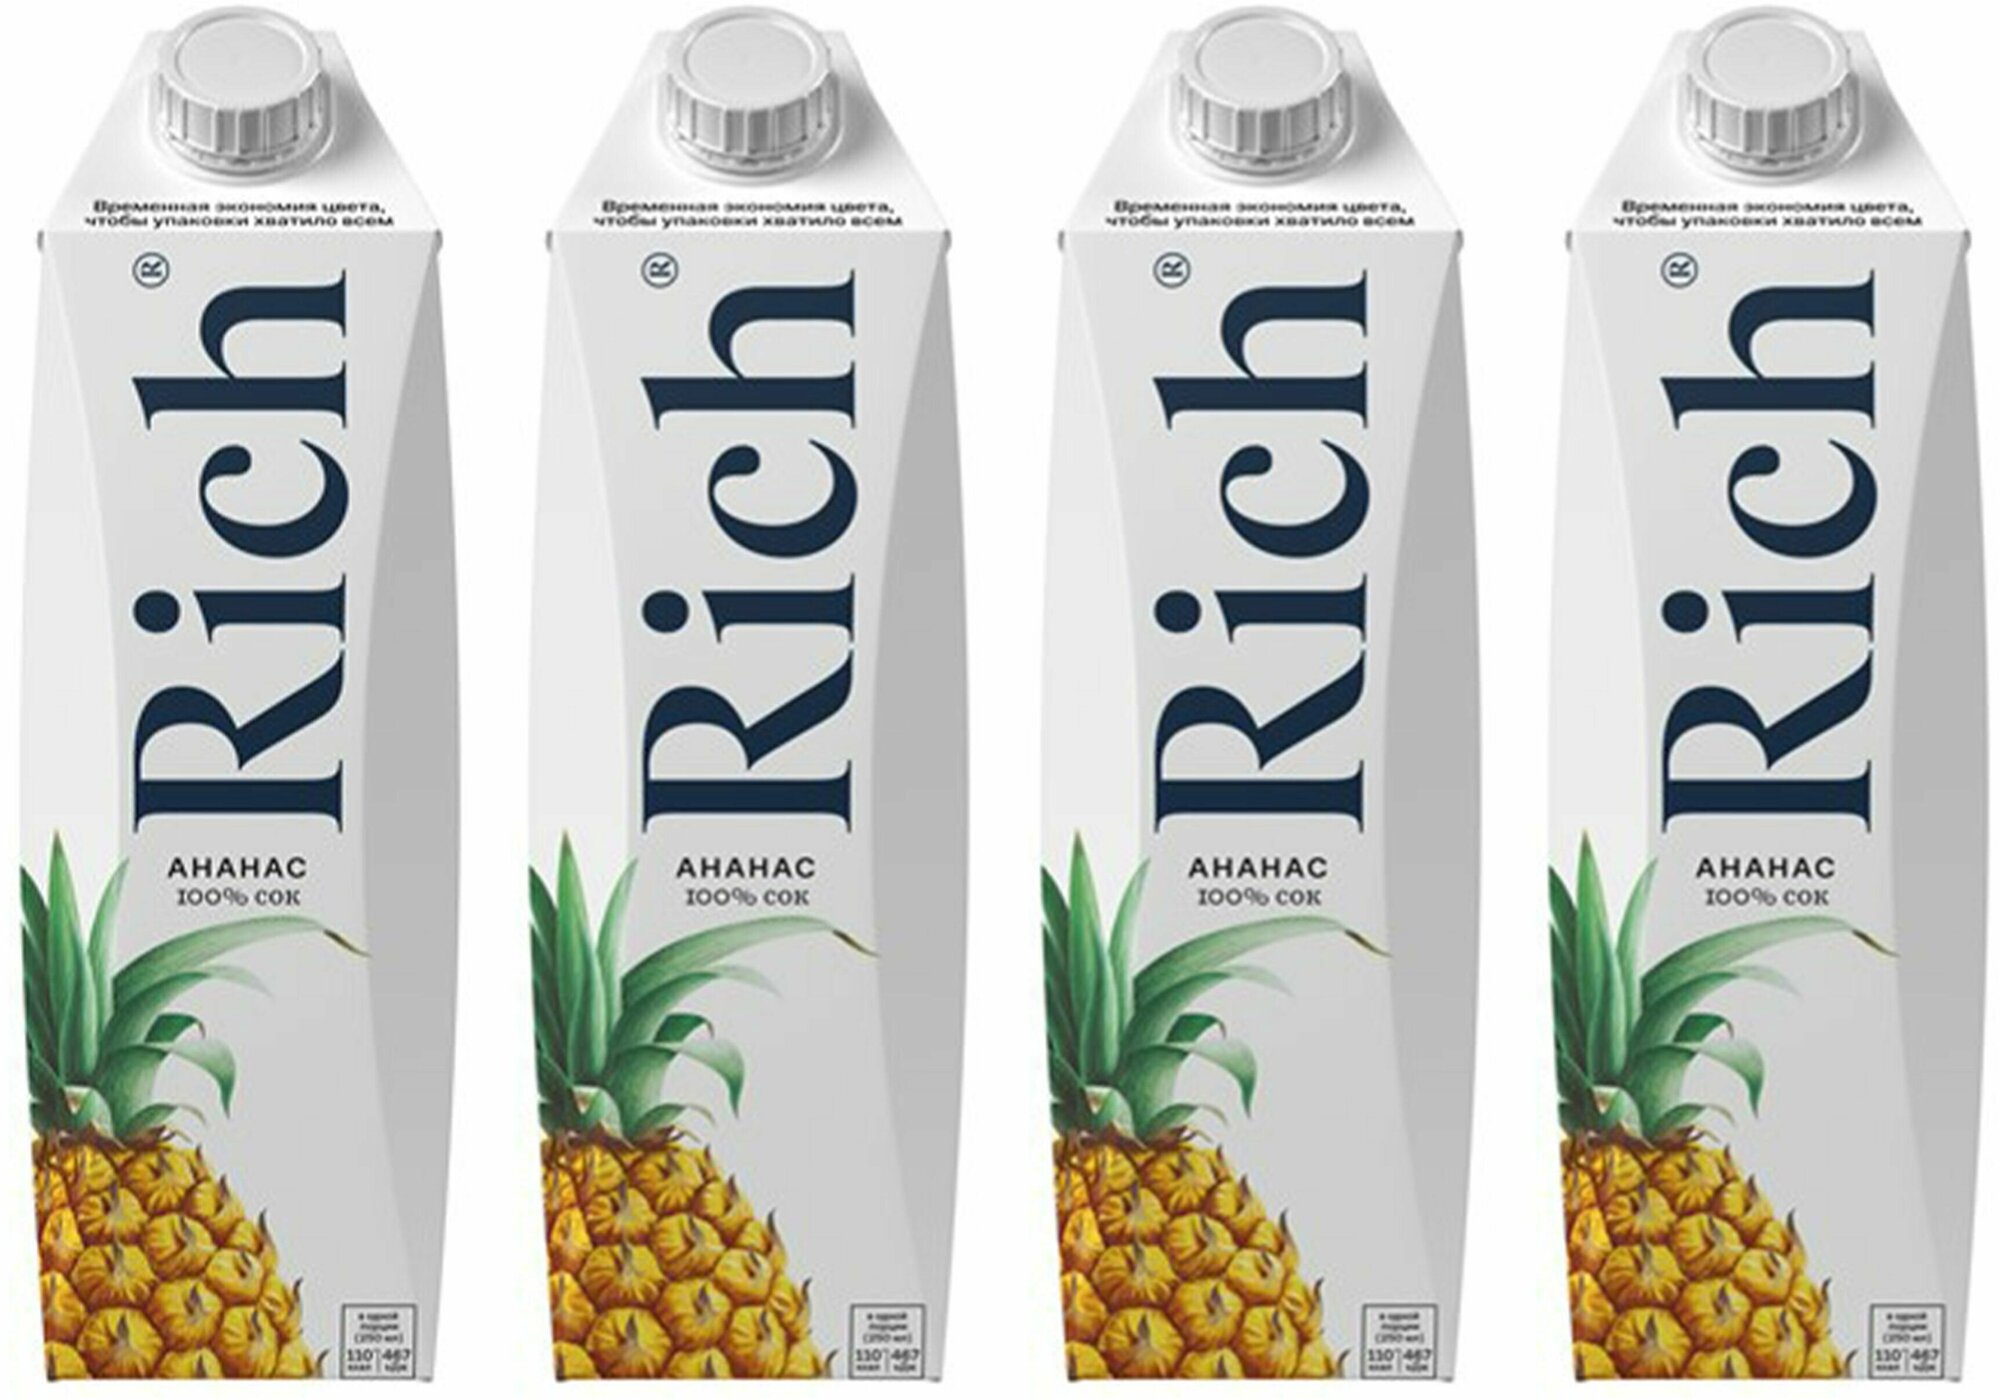 Сок Rich Ананас, 4 упаковки